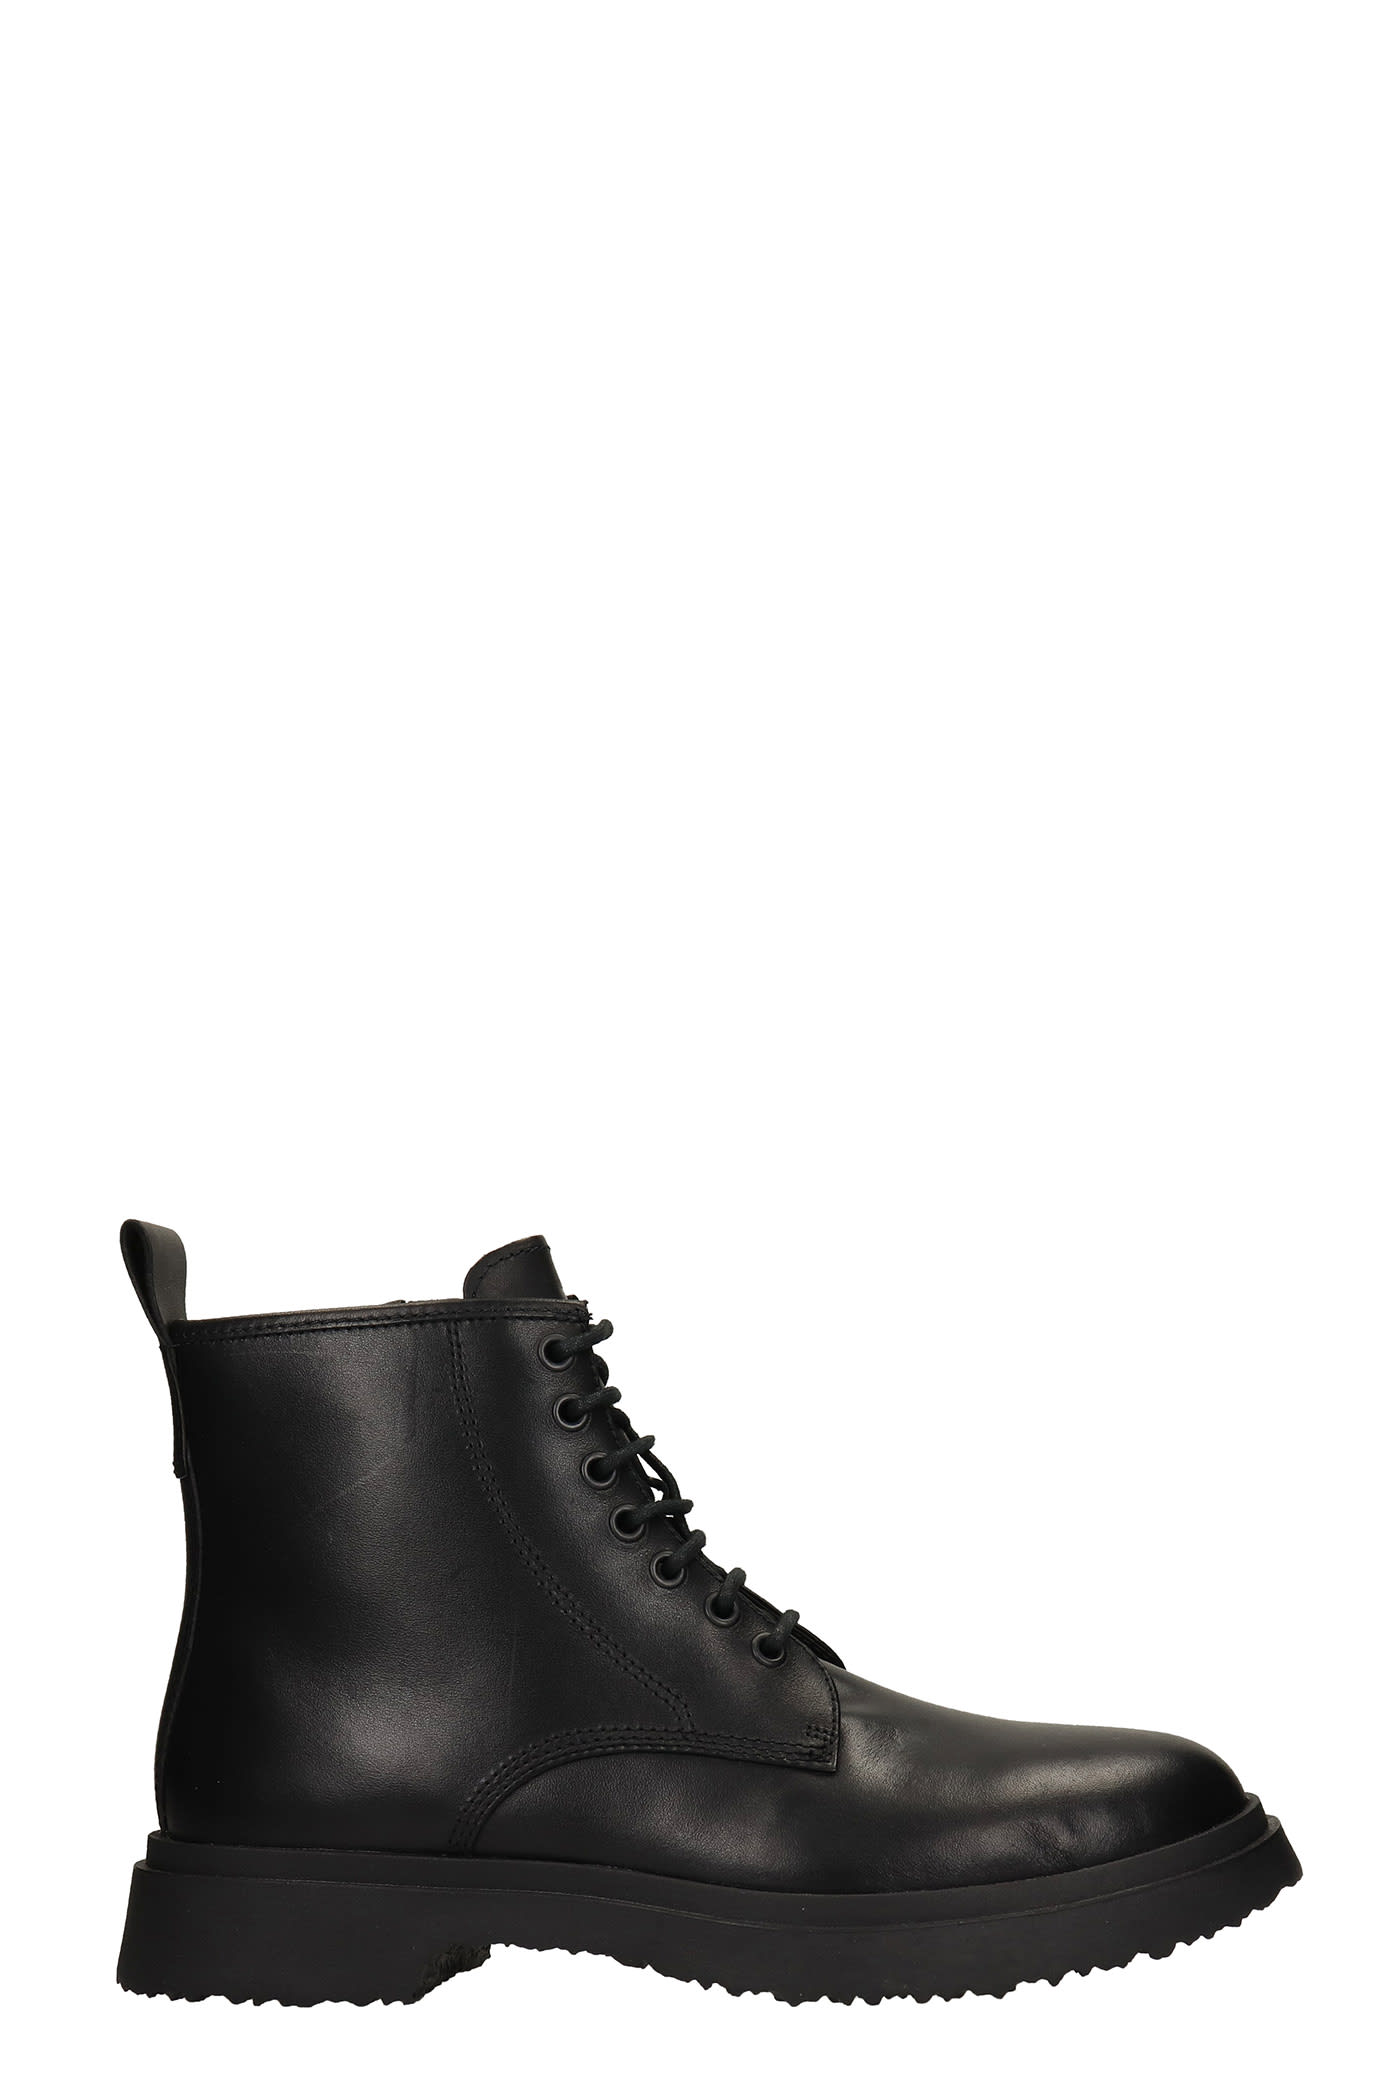 Camper Walden Combat Boots In Black Leather